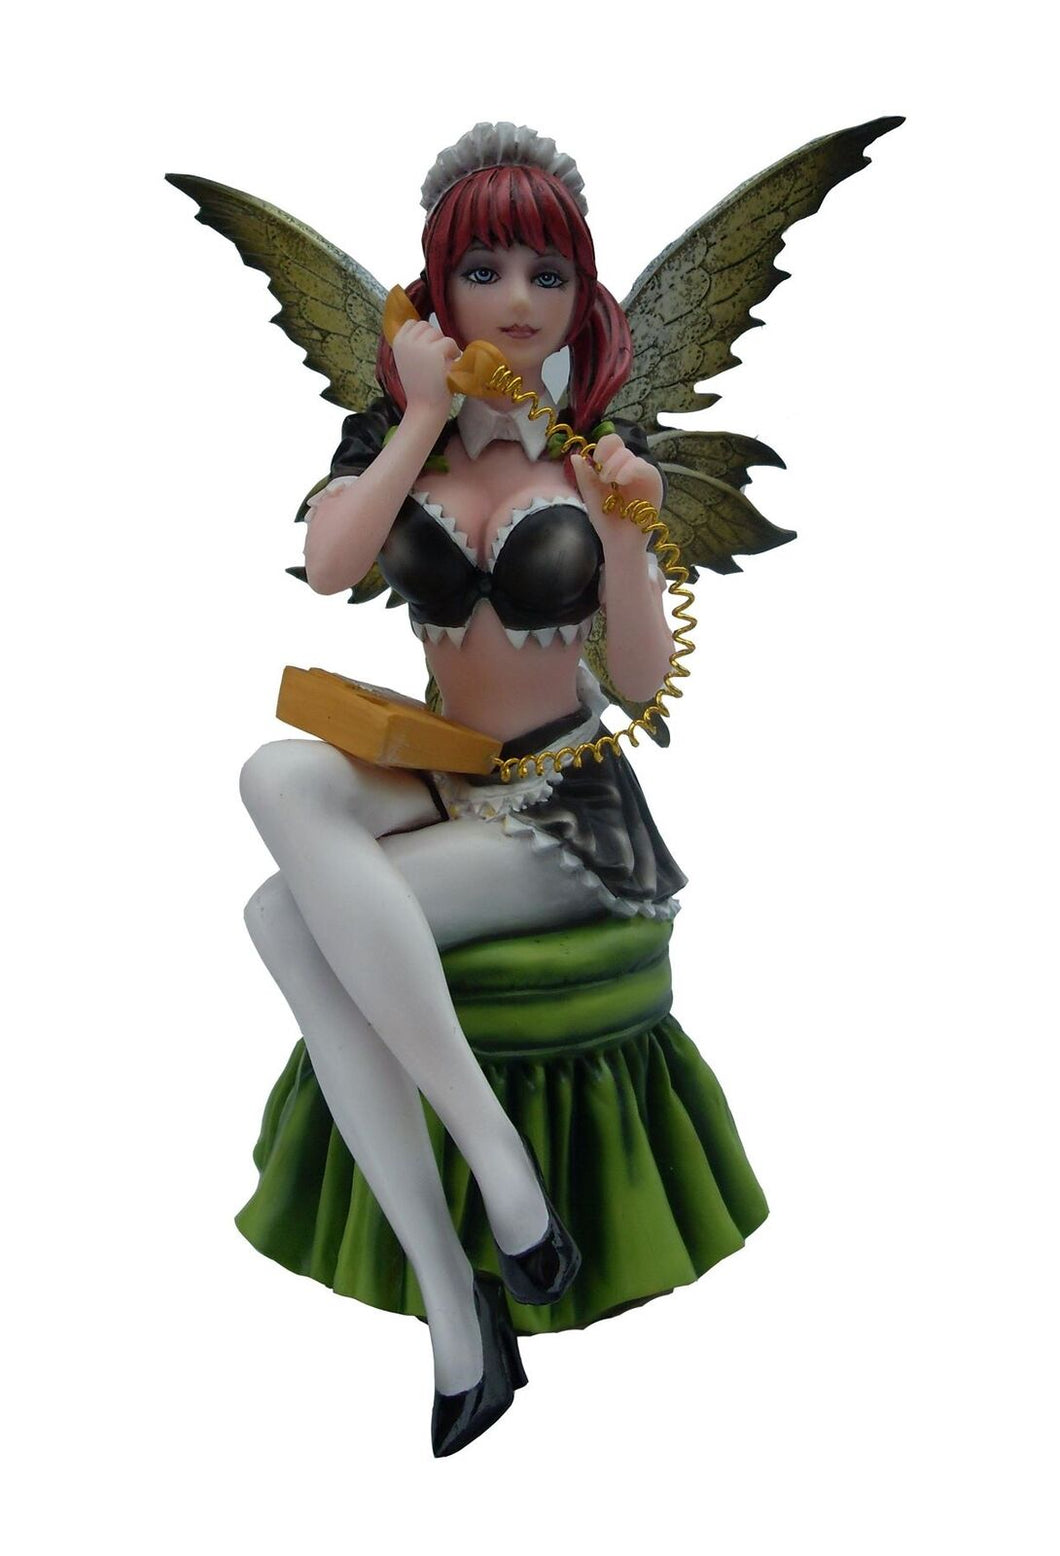 Seductive Fairy French Maid Answering Telephone Figurine Statue Ornament